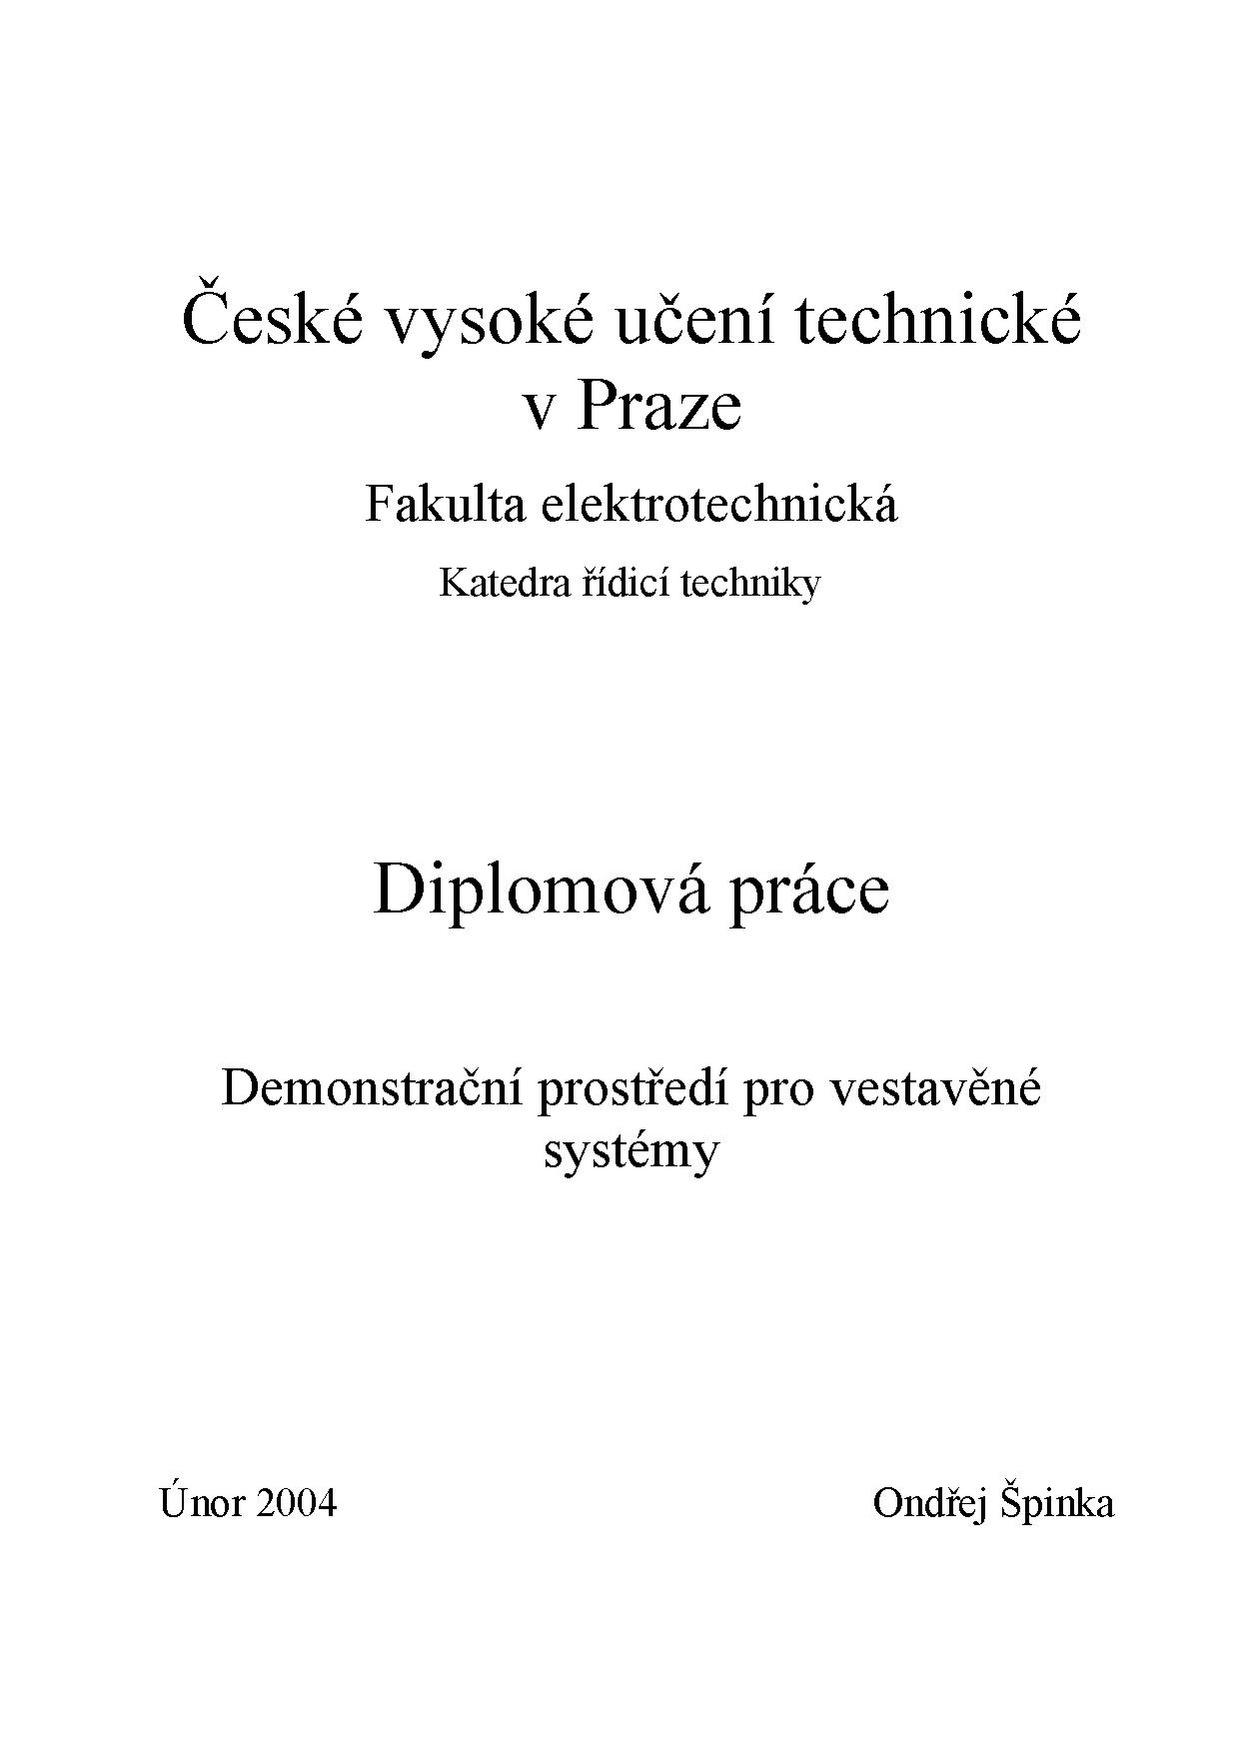 Dp 2004 spinka ondrej.pdf